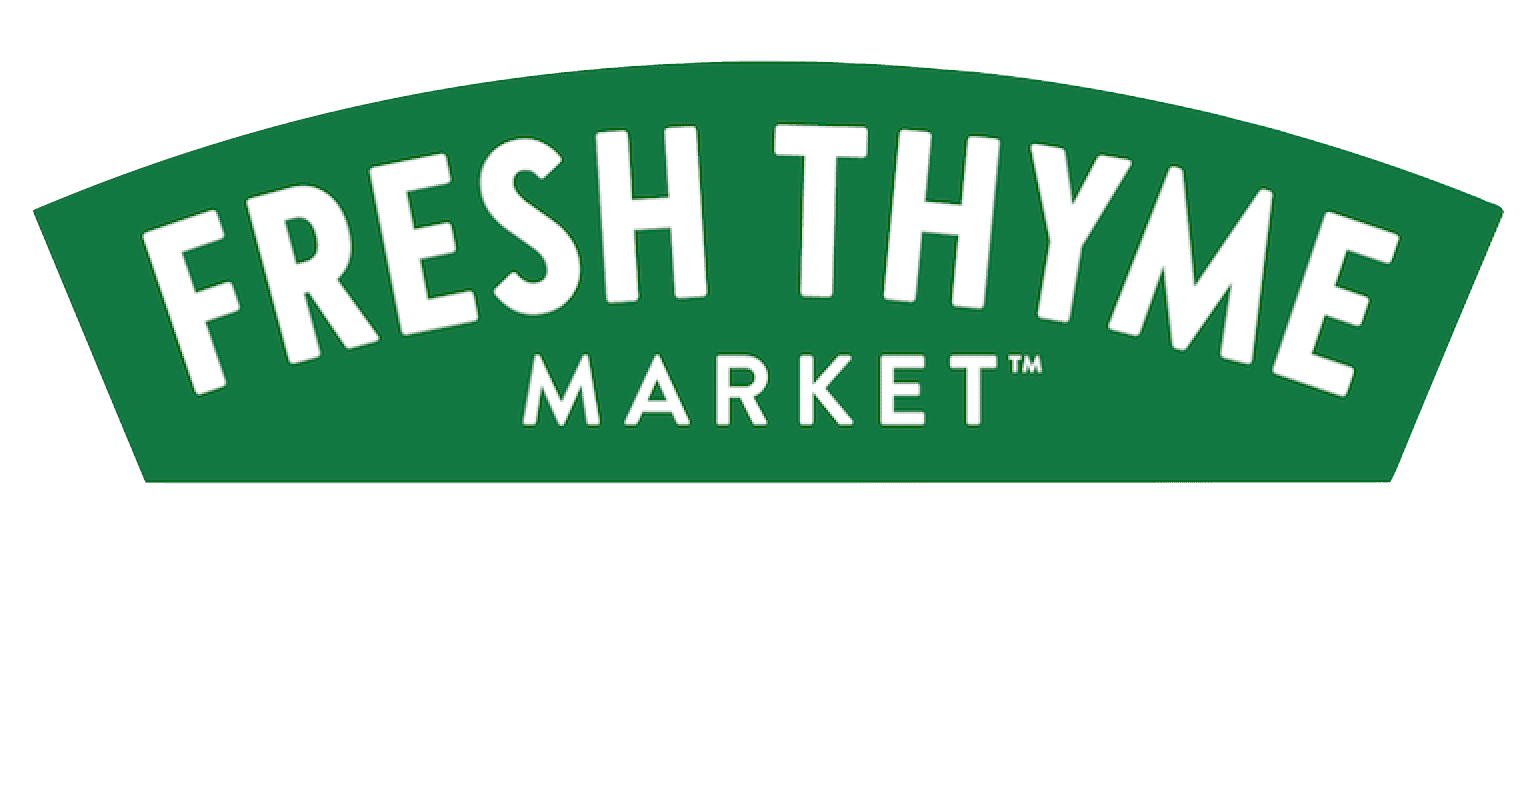 Fresh_Thyme_new_banner_logo_Aug2020 (3) (1)